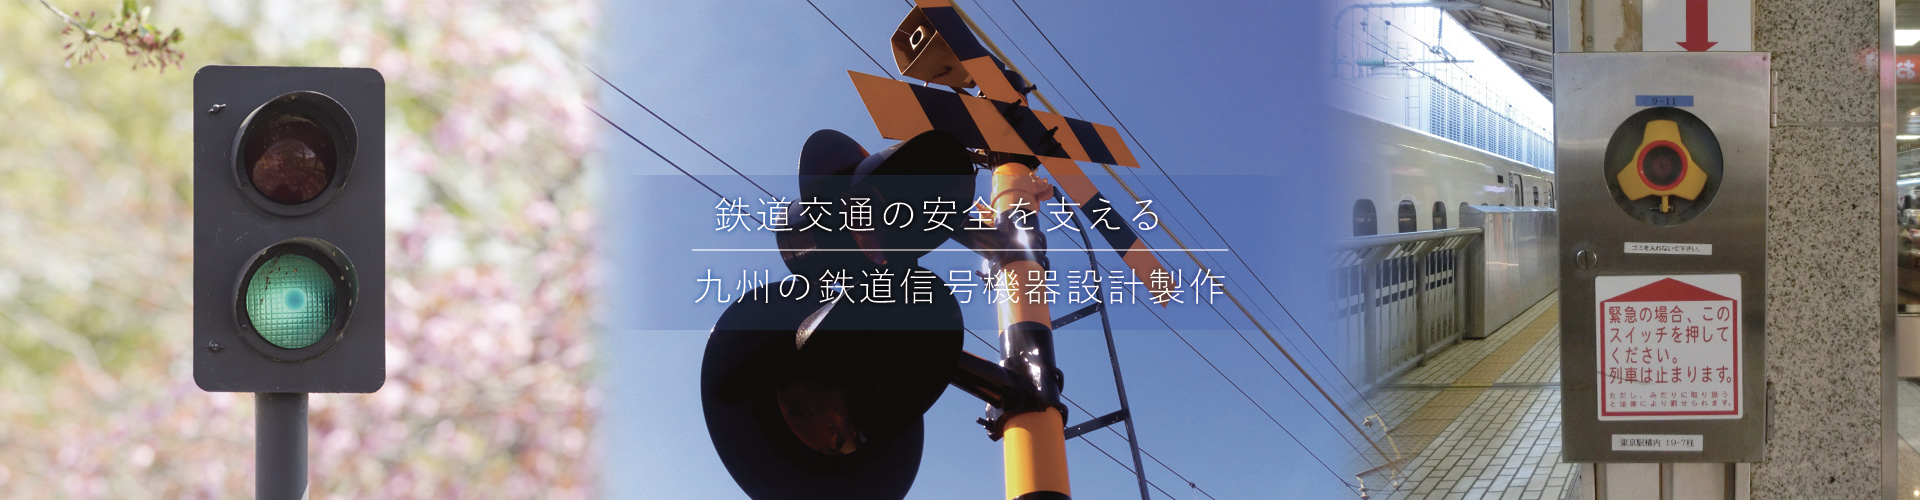 鉄道の信号機器製造の日本産業株式会社